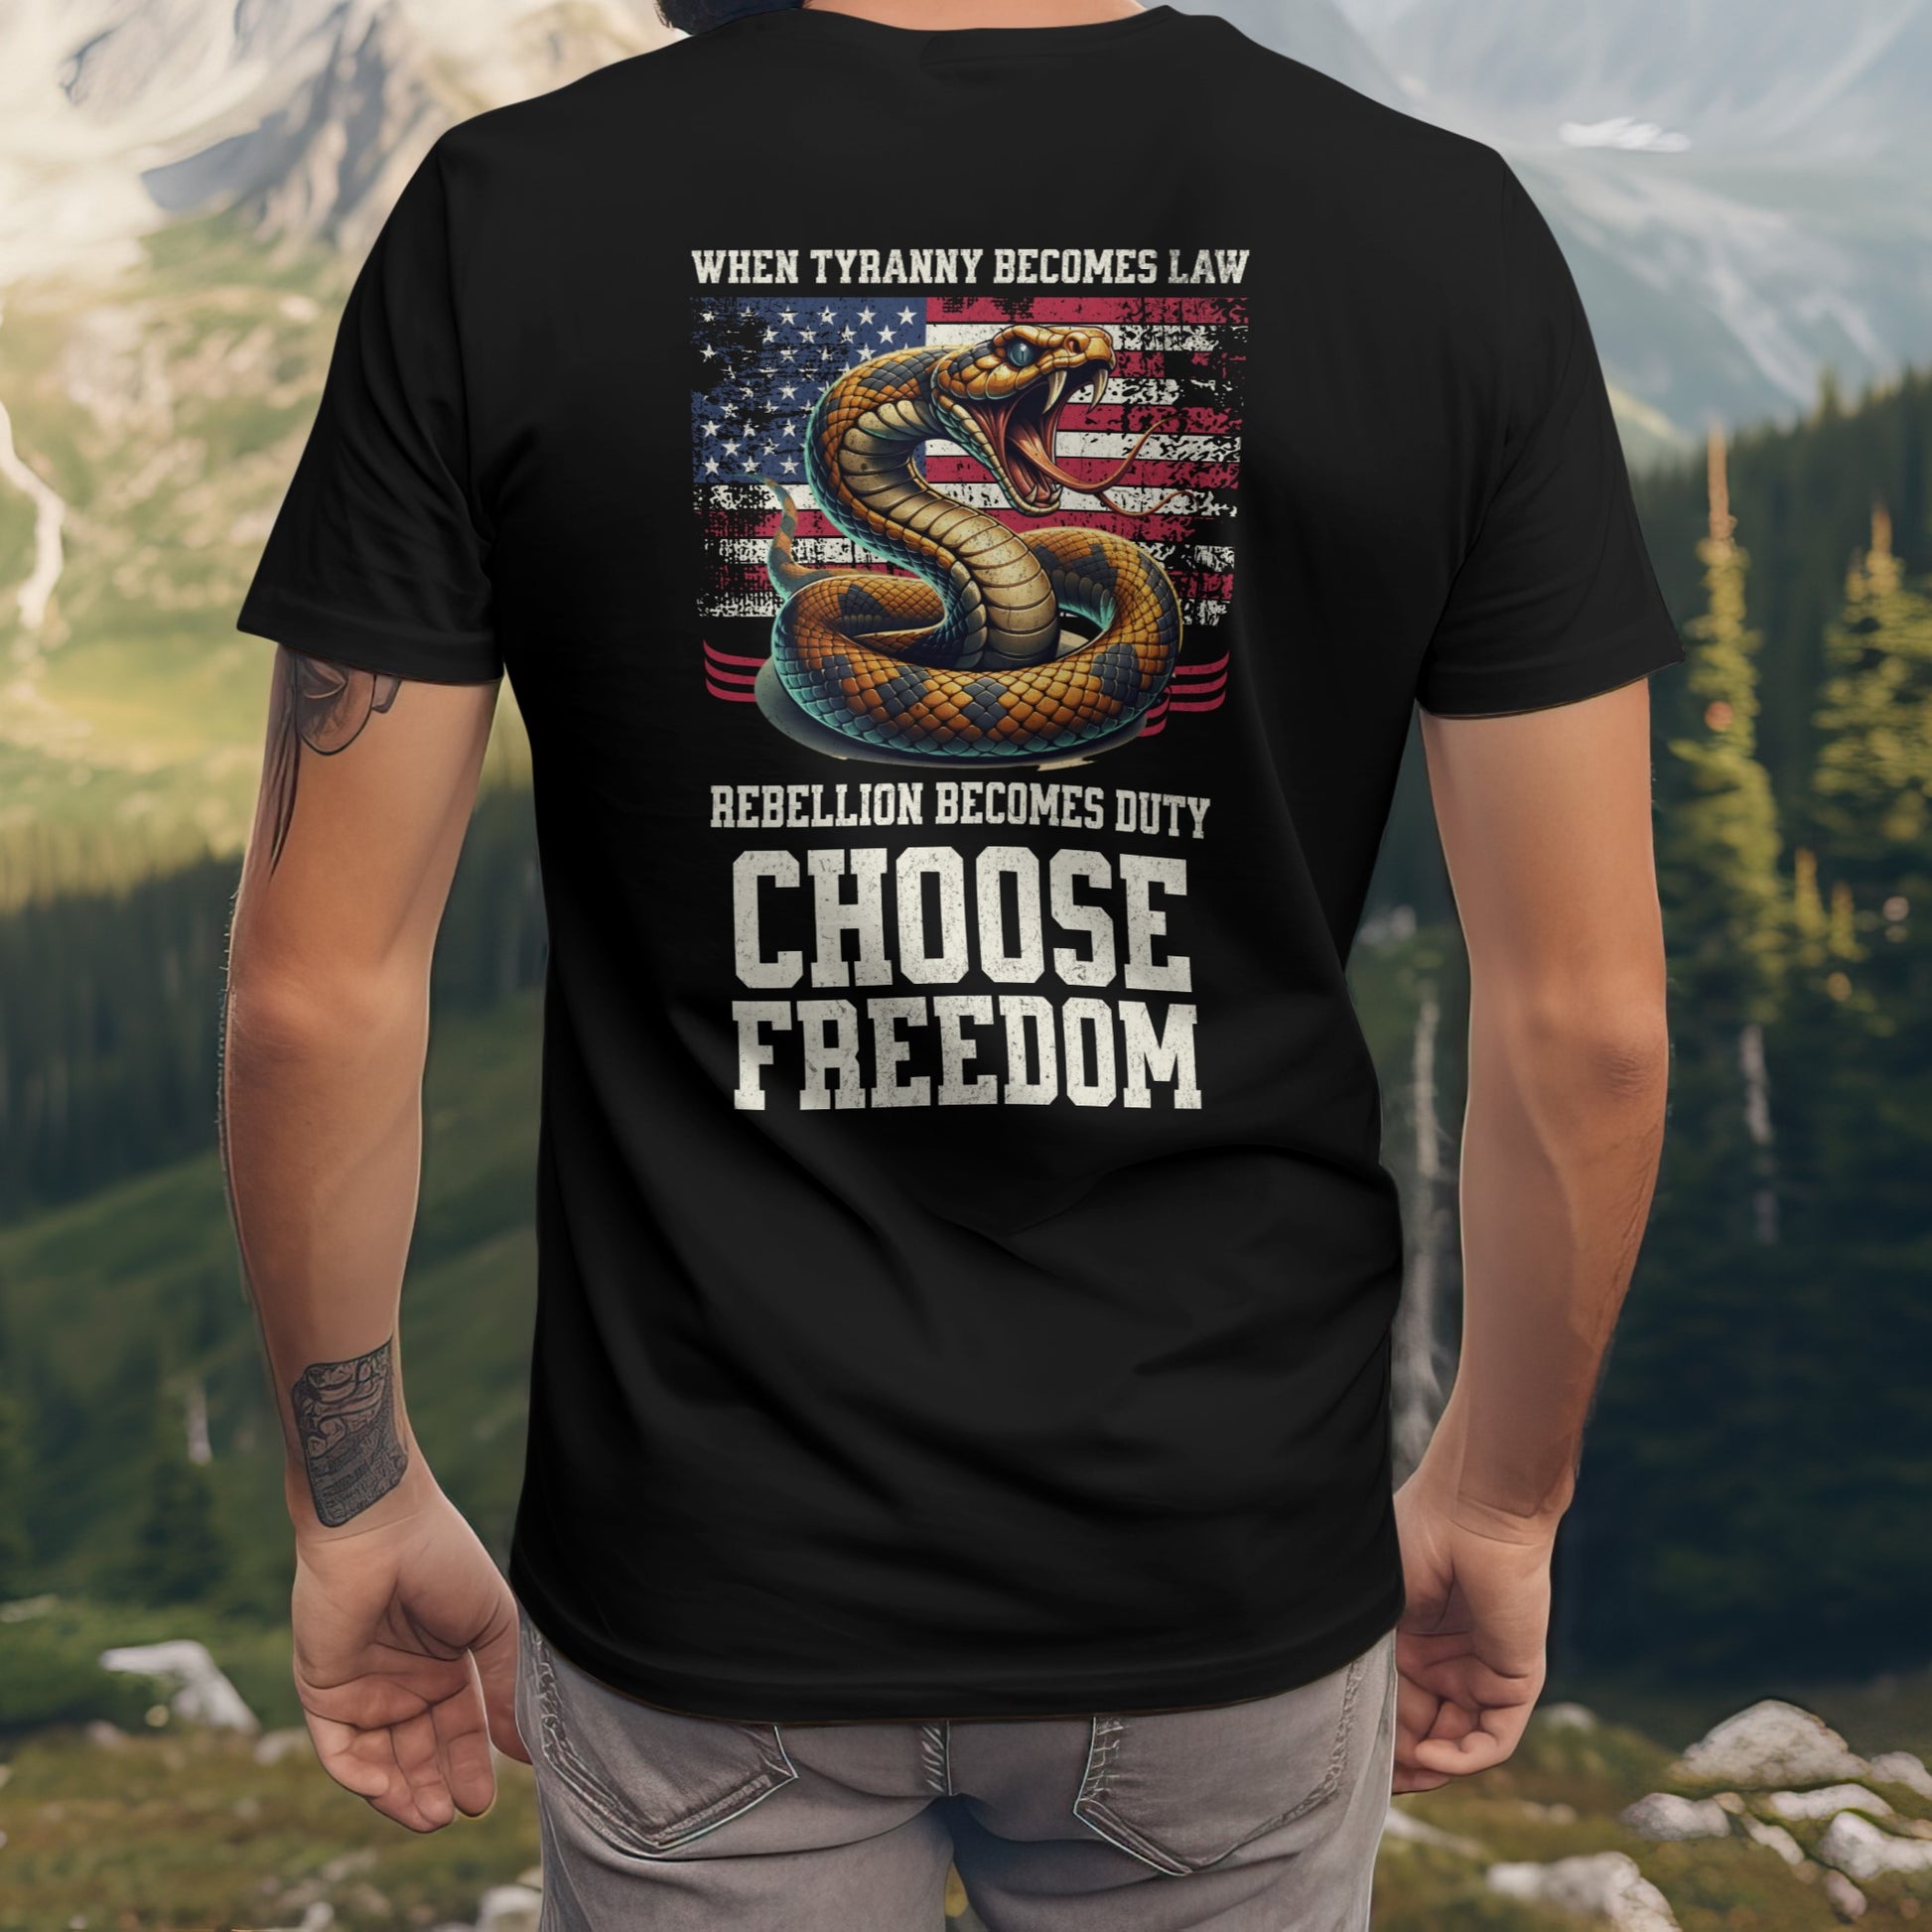 Don't Tread On me Snake T-shirt